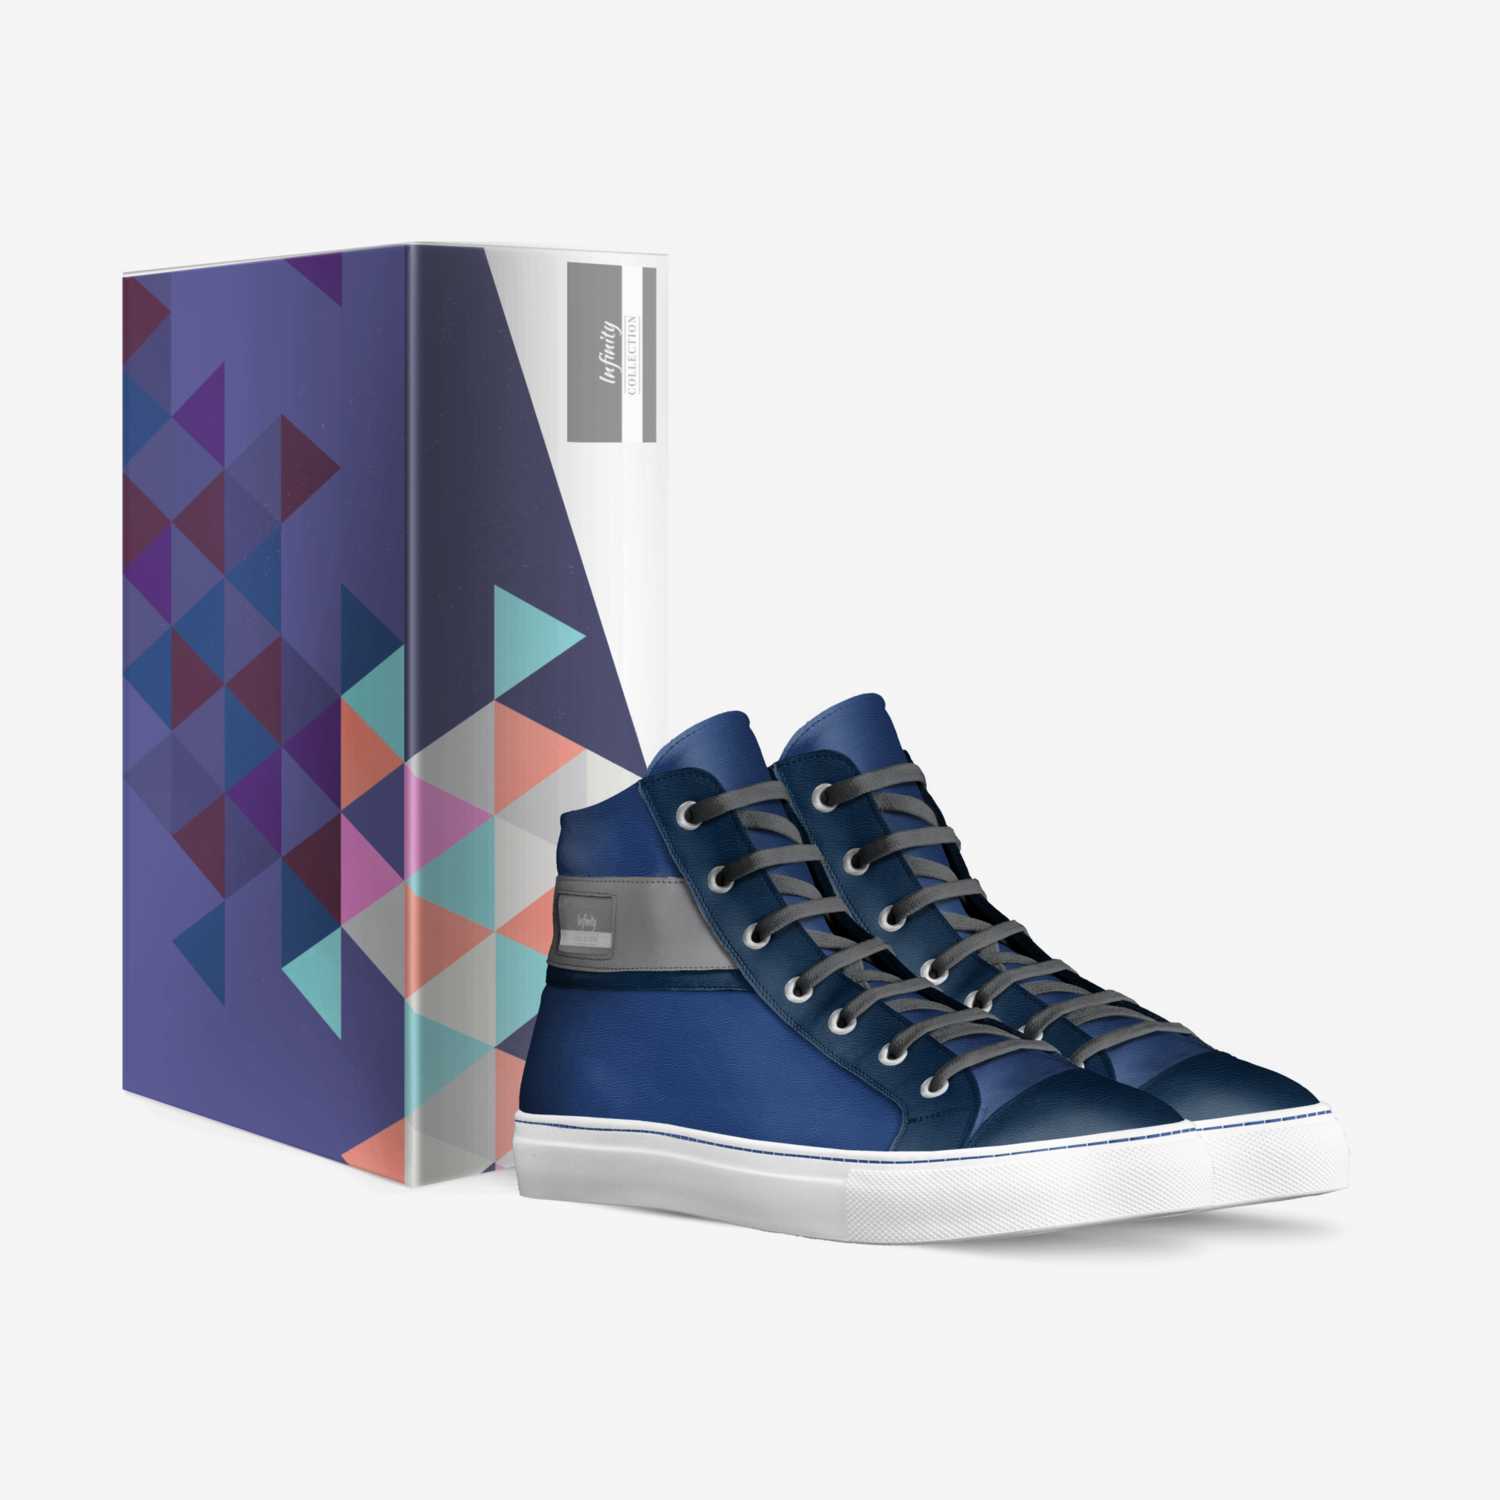 Randis custom made in Italy shoes by Randi Wilson | Box view